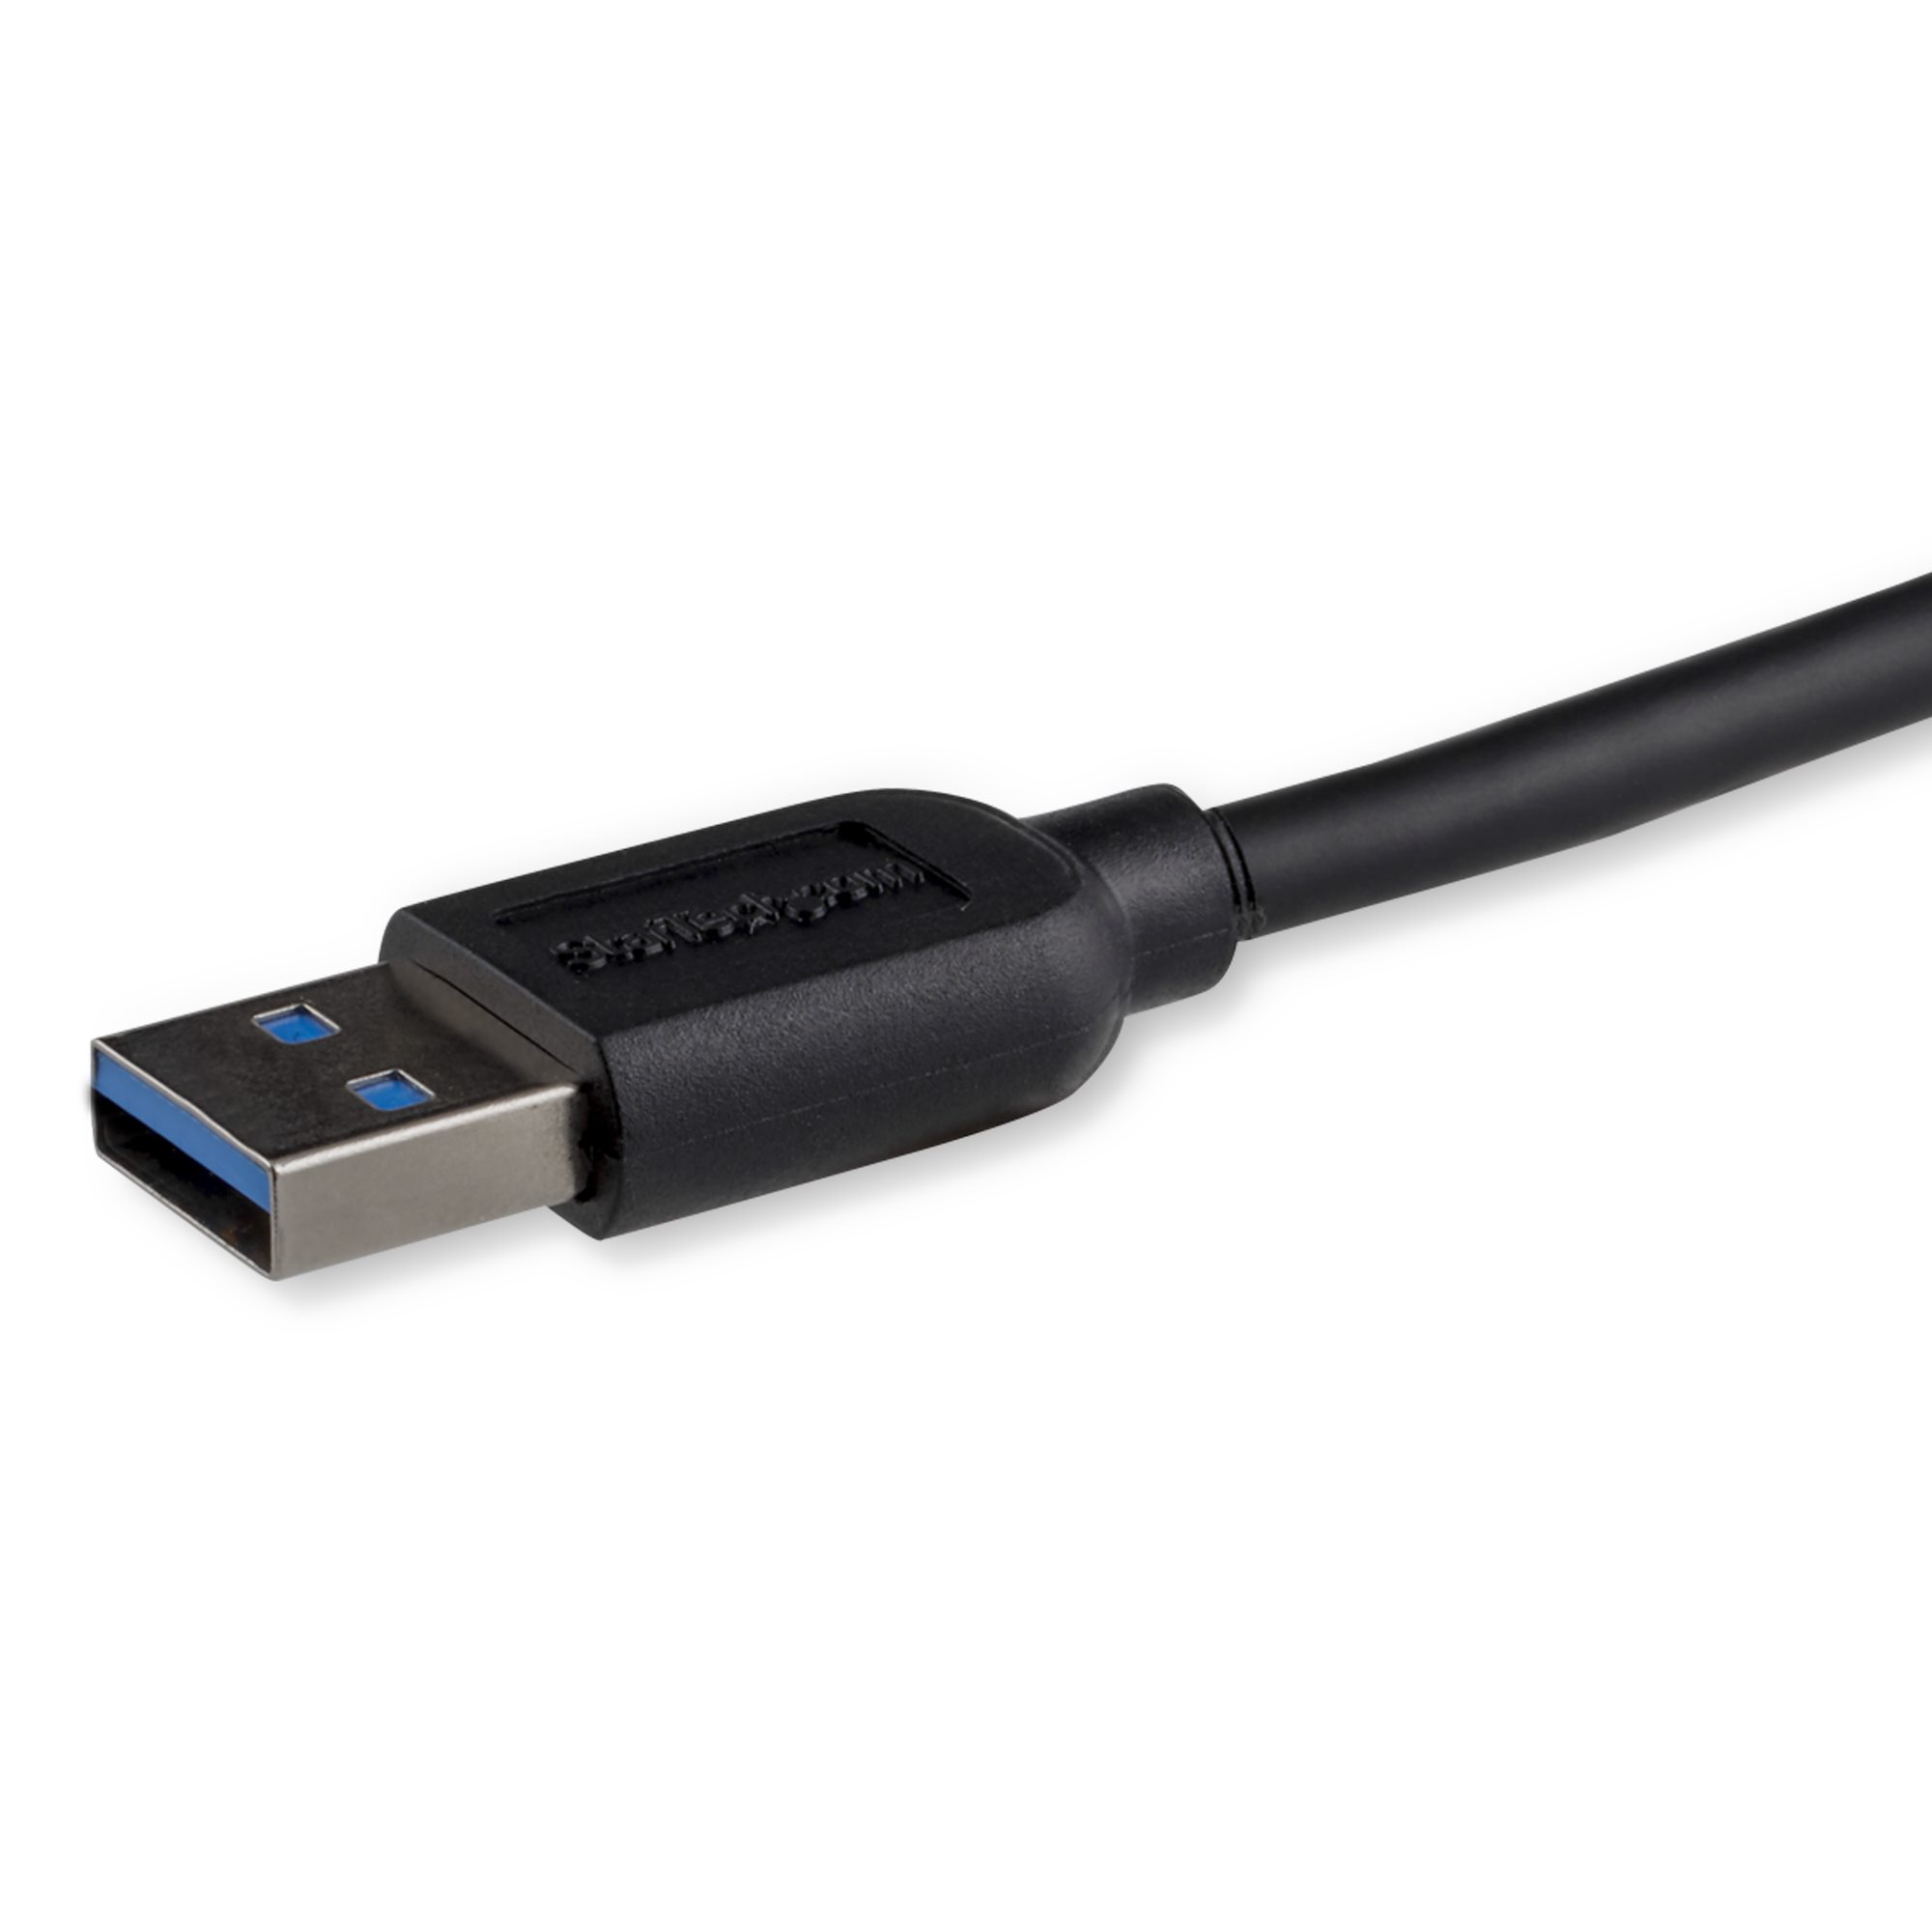 Gelukkig R hoeveelheid verkoop 0.5m 20in Slim USB 3.0 Micro B Cable - USB 3.0 Cables | StarTech.com